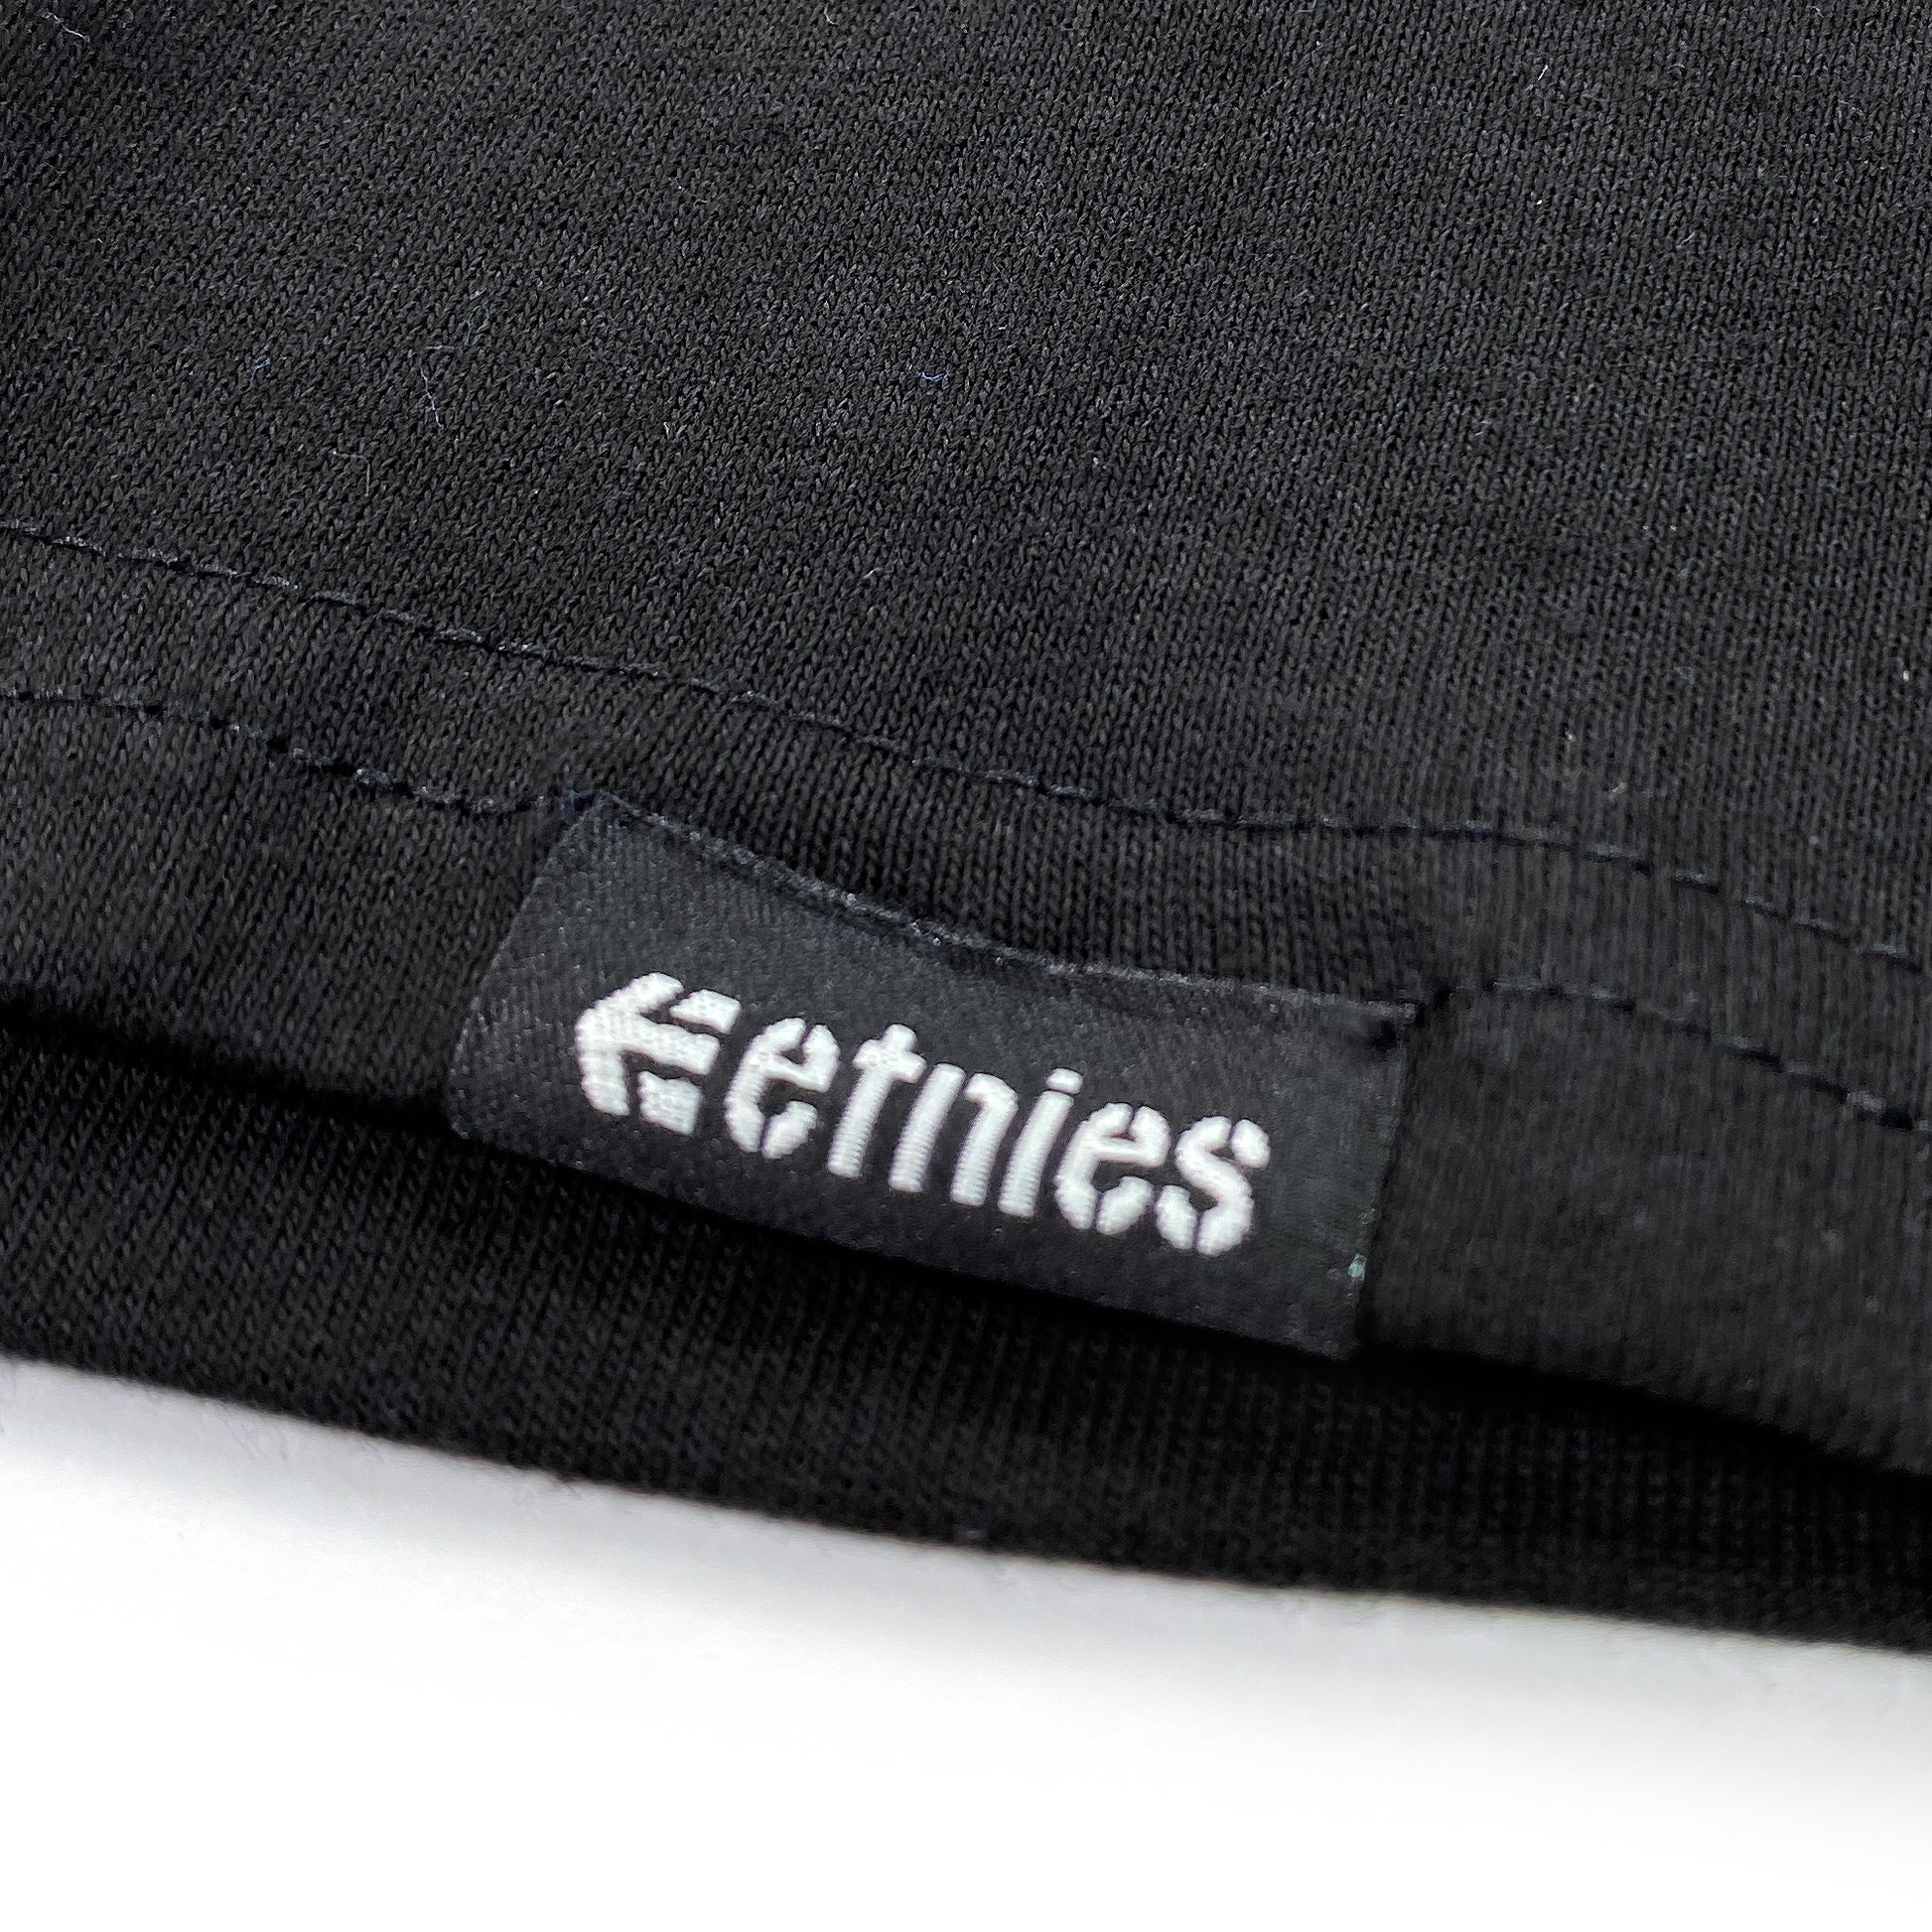 Etnies Retro SS T-shirt - Black - Prime Delux Store